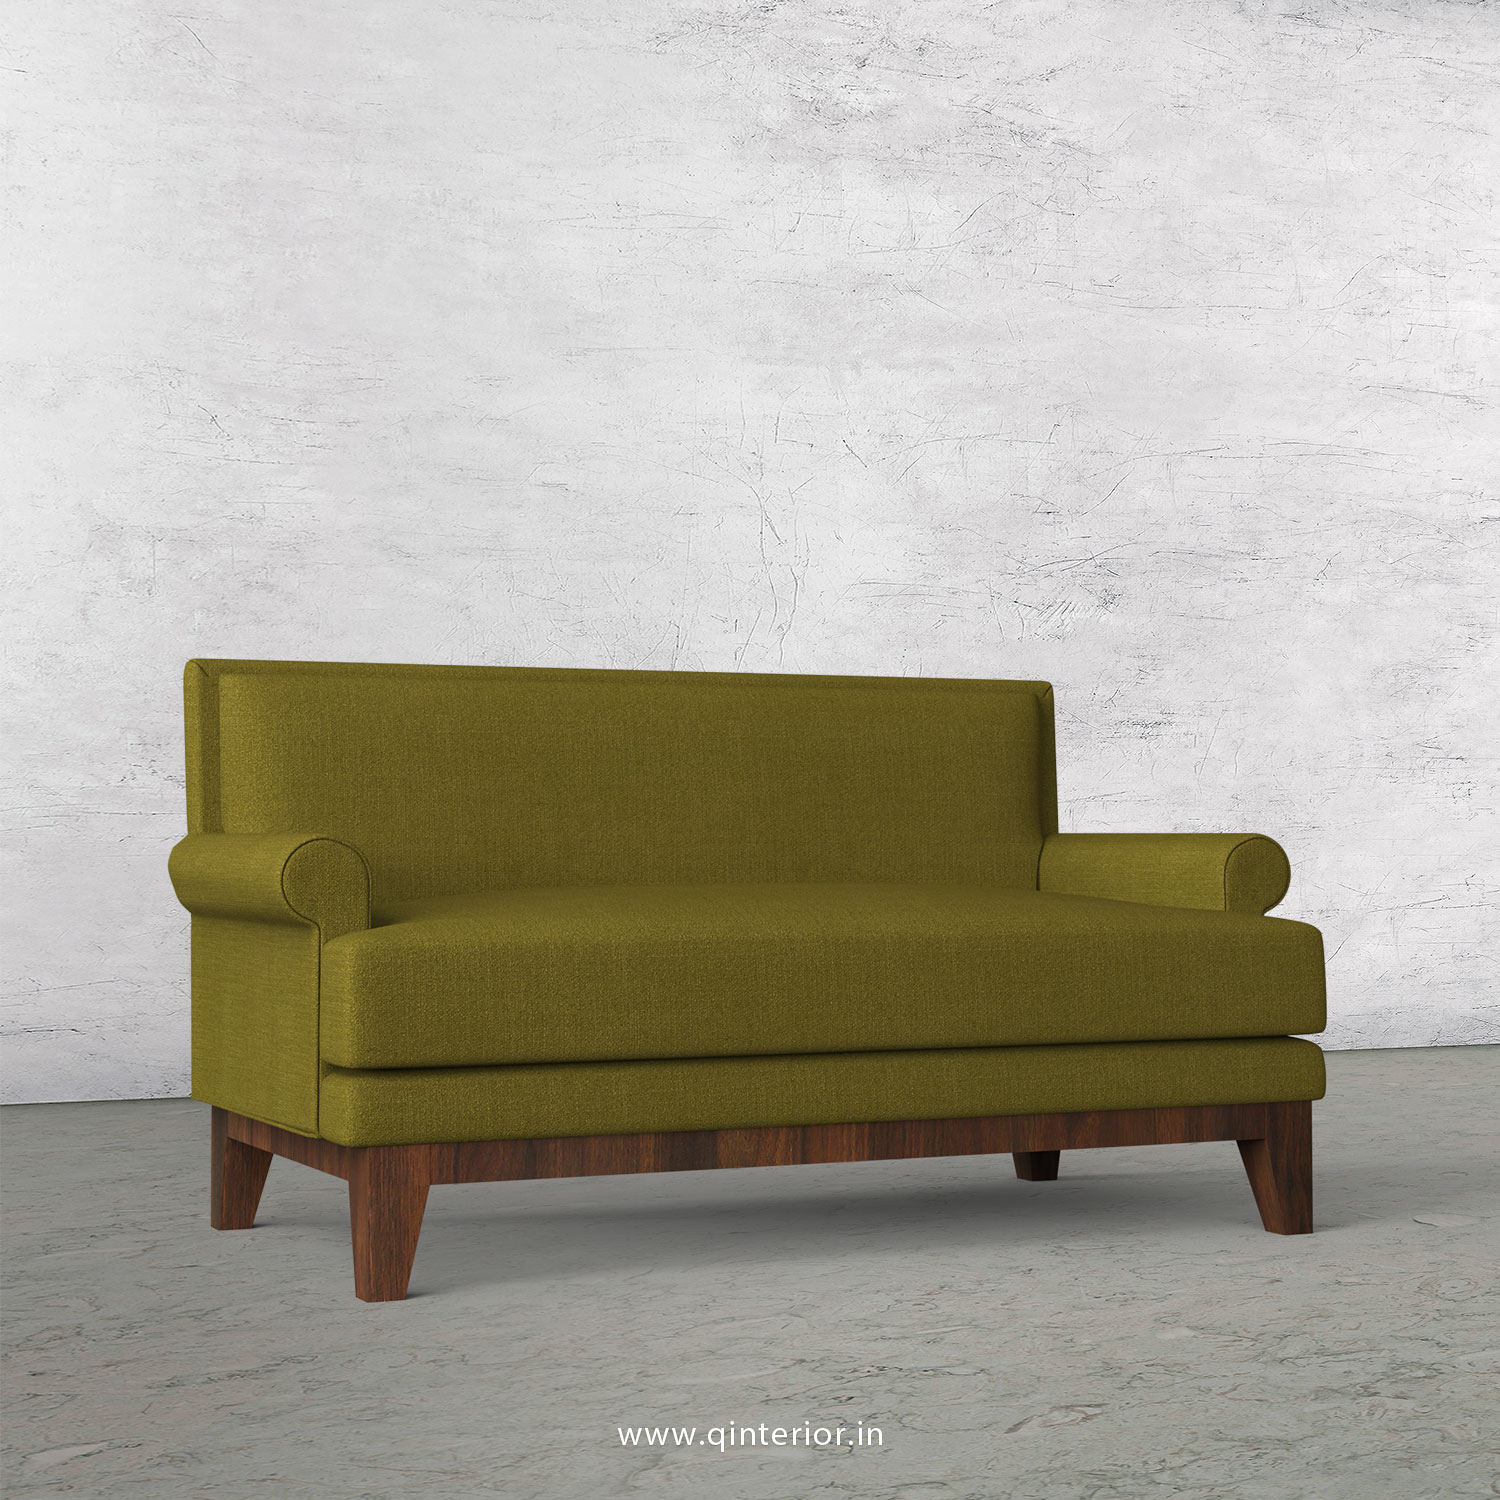 Aviana 2 Seater Sofa in Bargello Fabric - SFA001 BG03